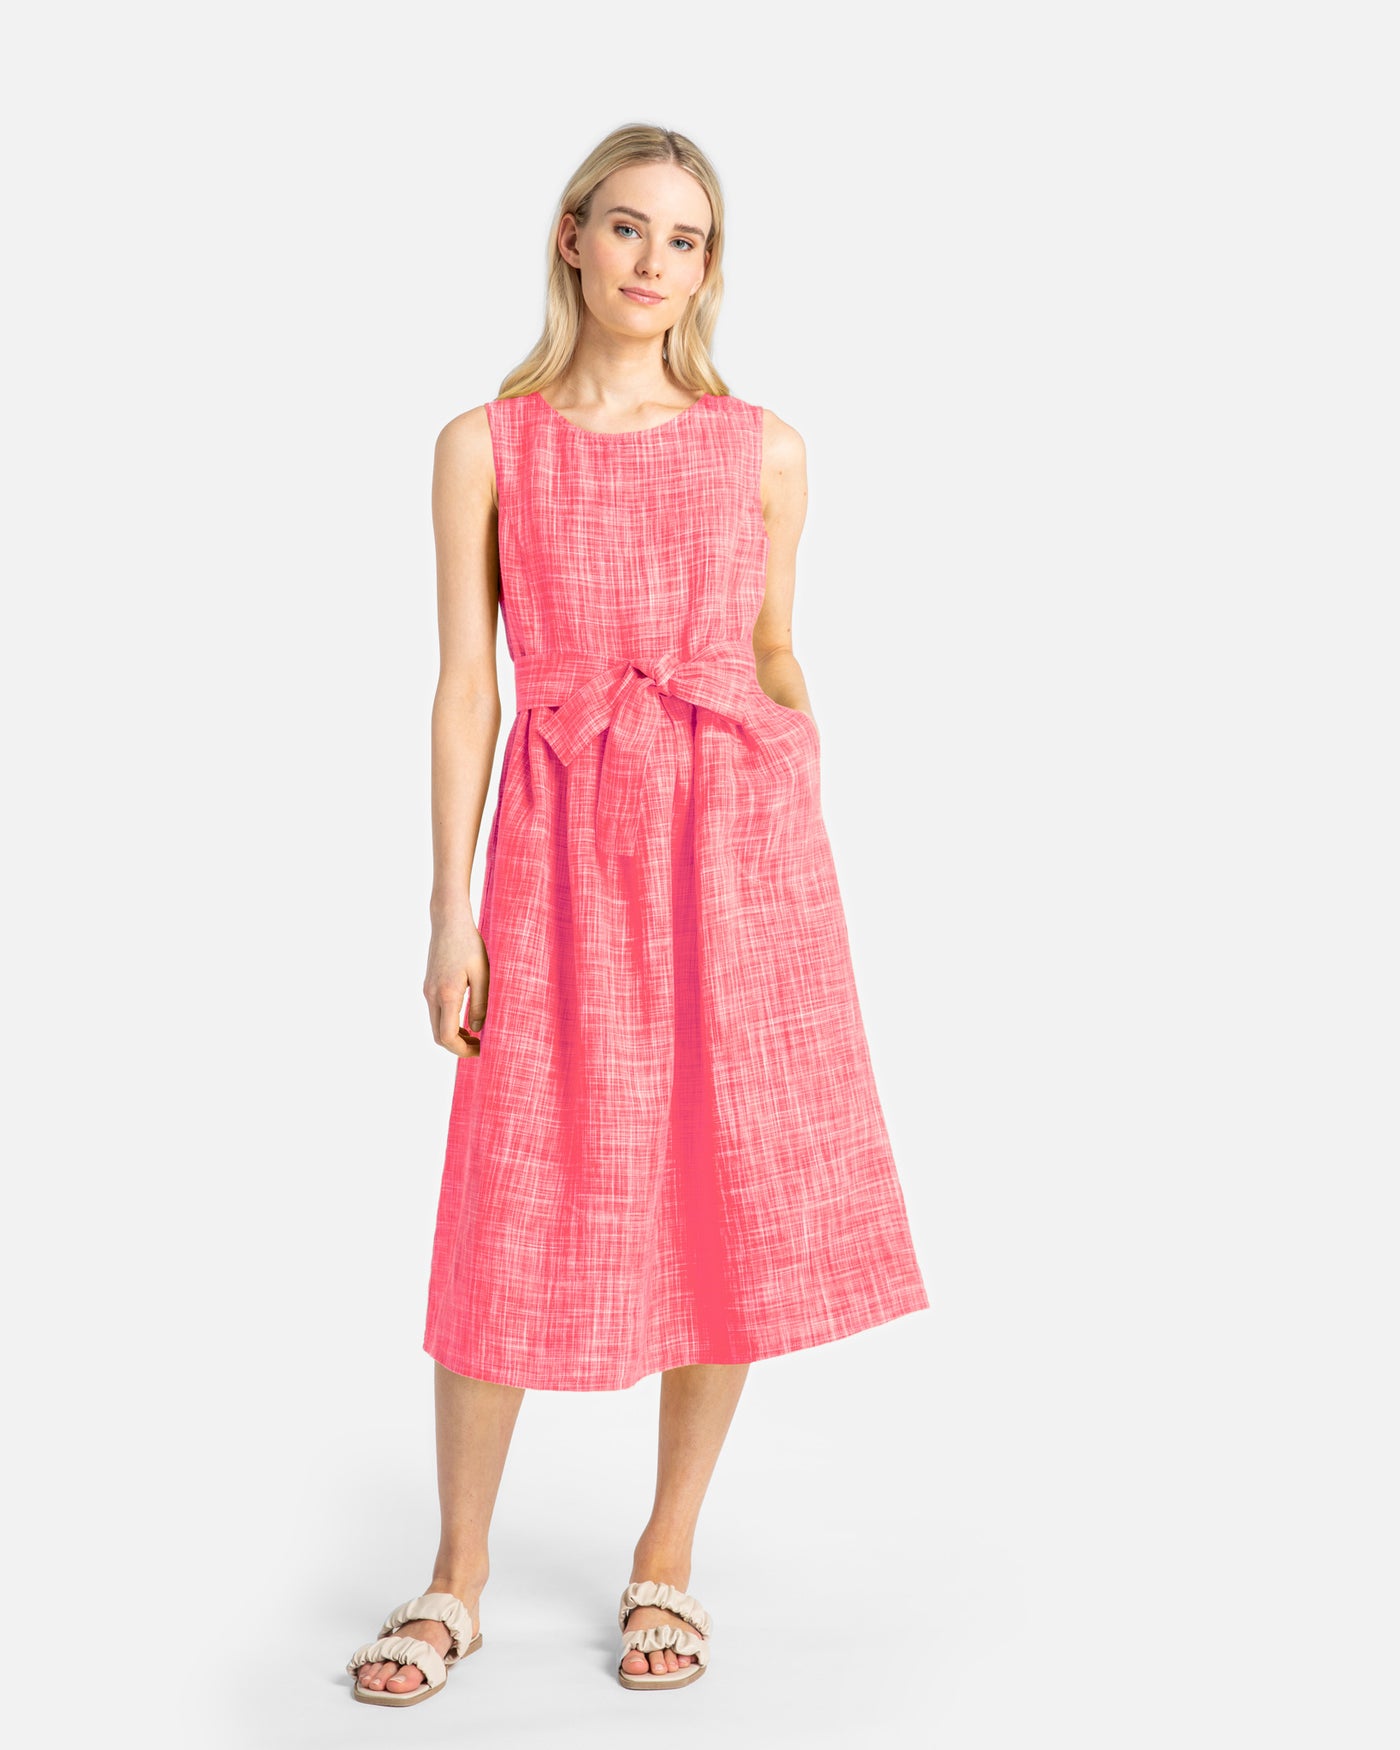 Kuusama Birgit Linen Sleeveless Dress, Pink Melange